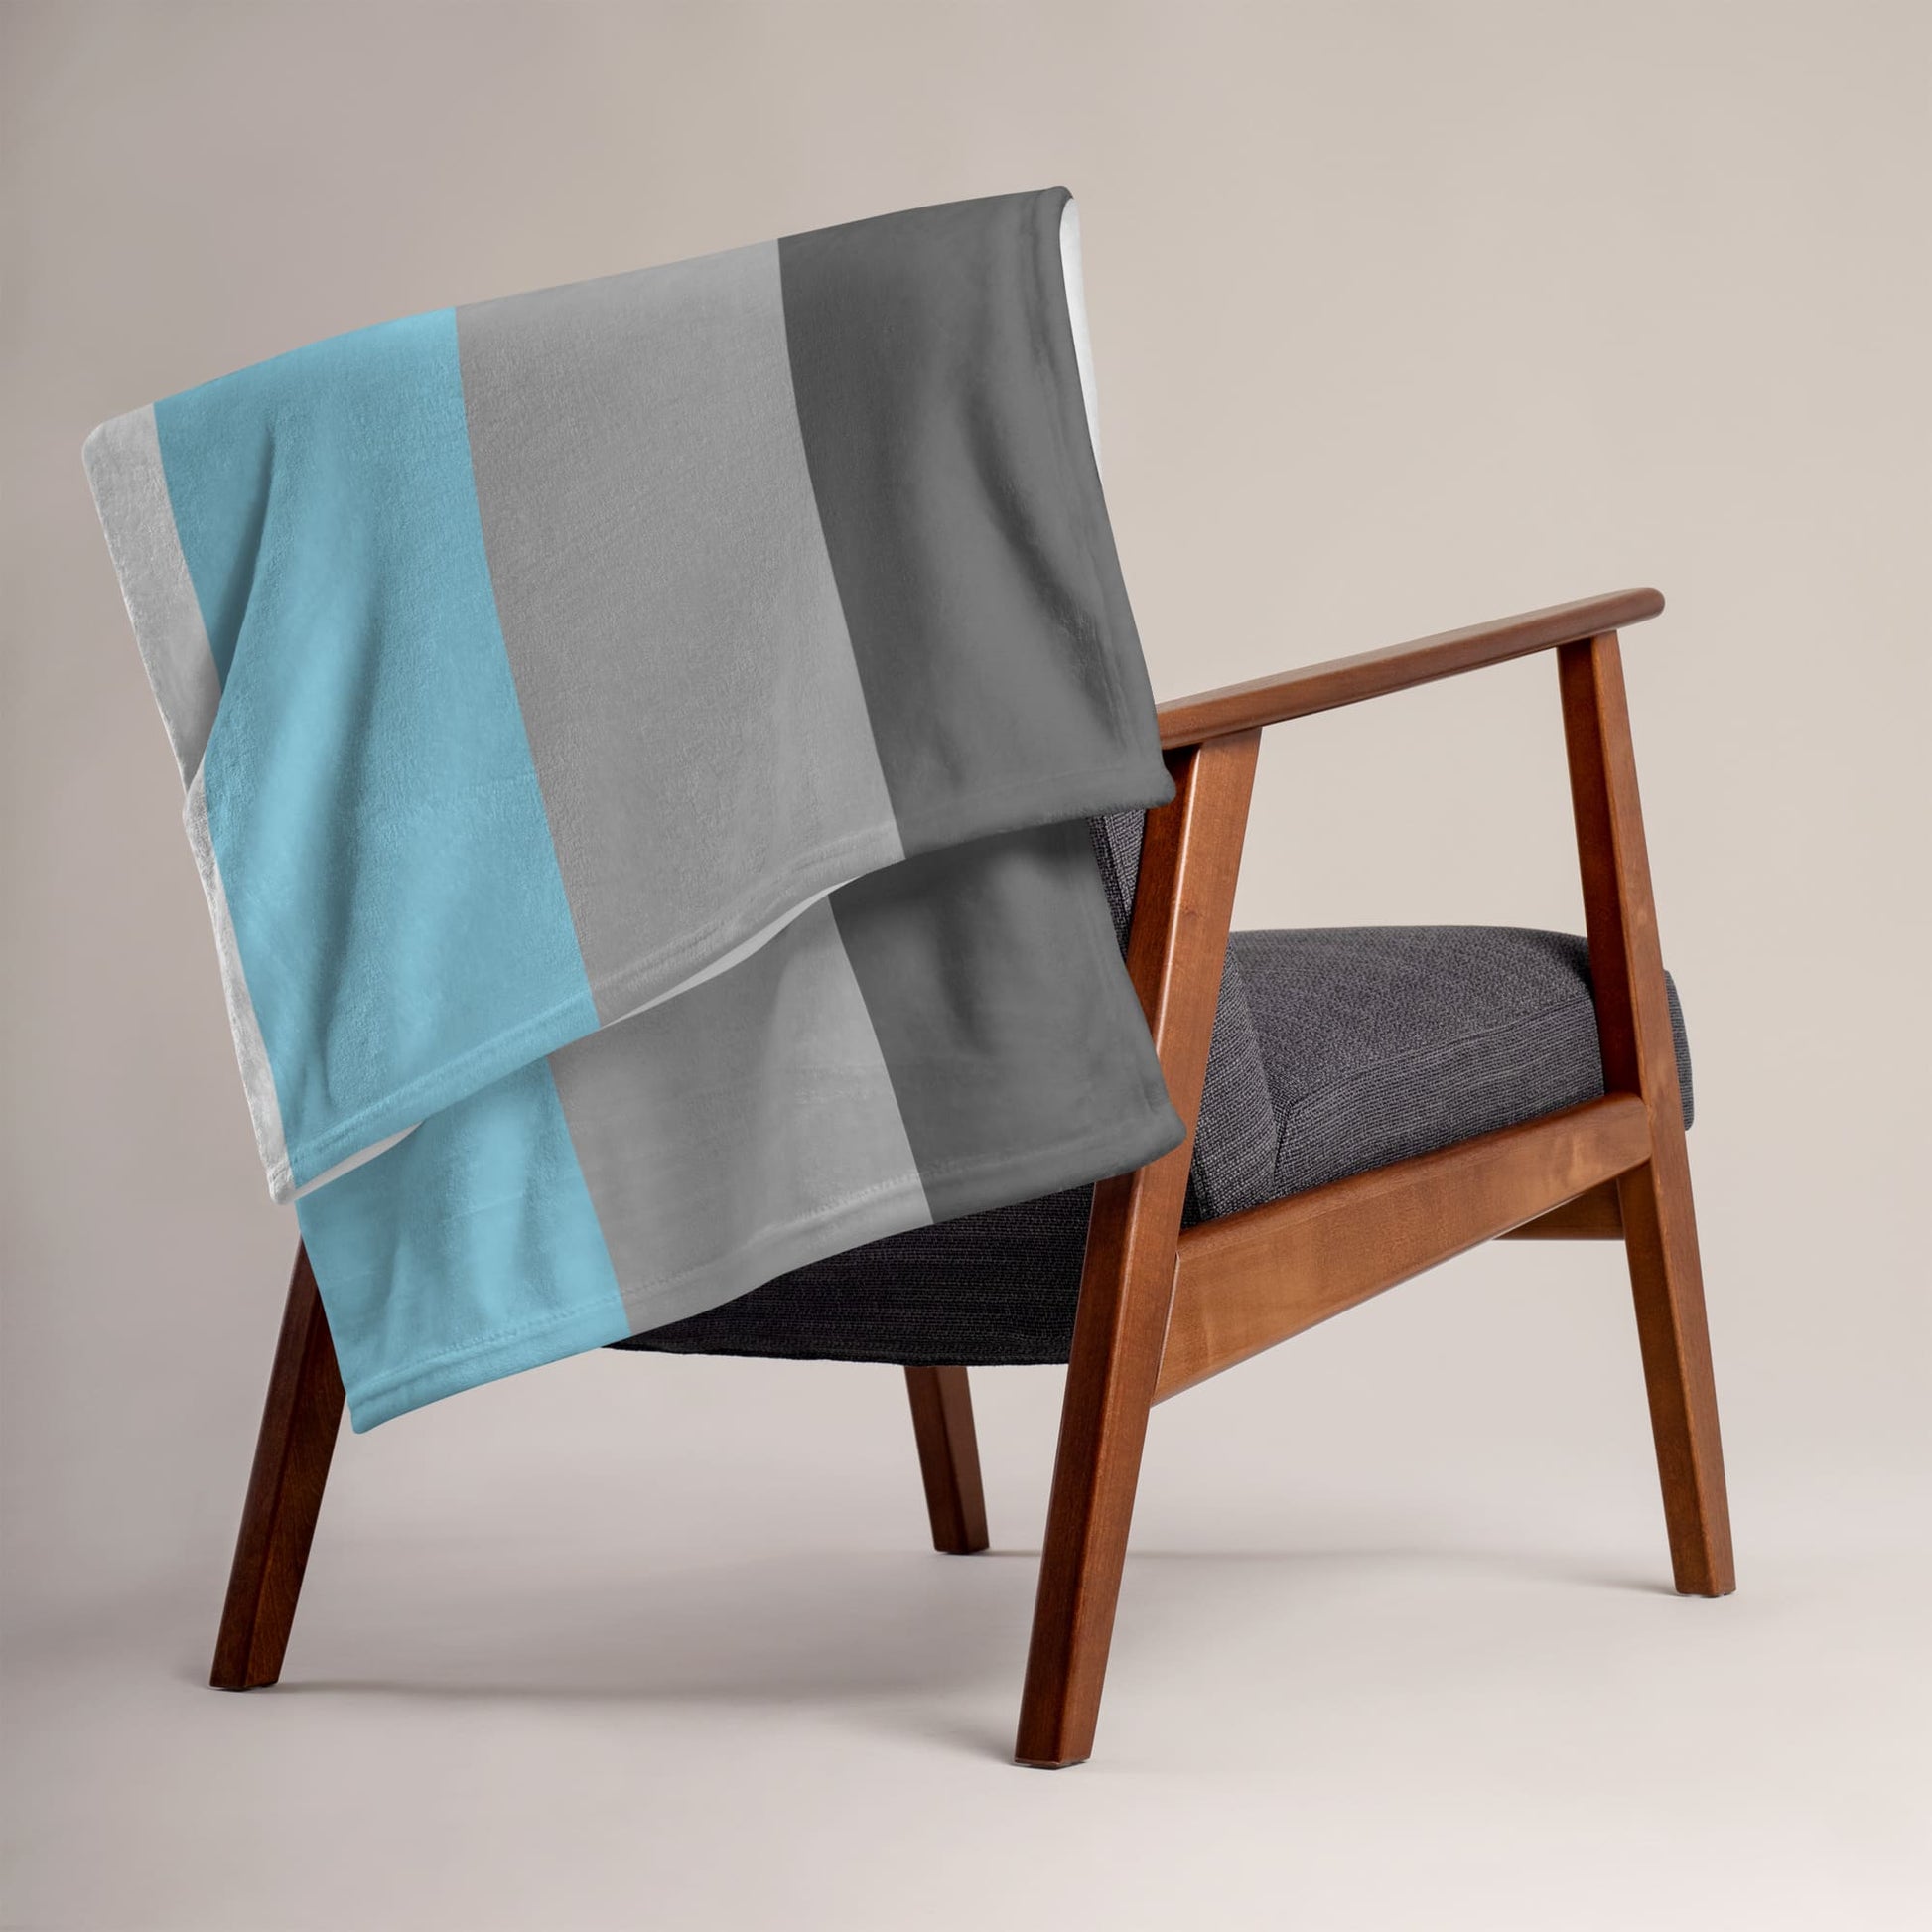 demiboy blanket on chair